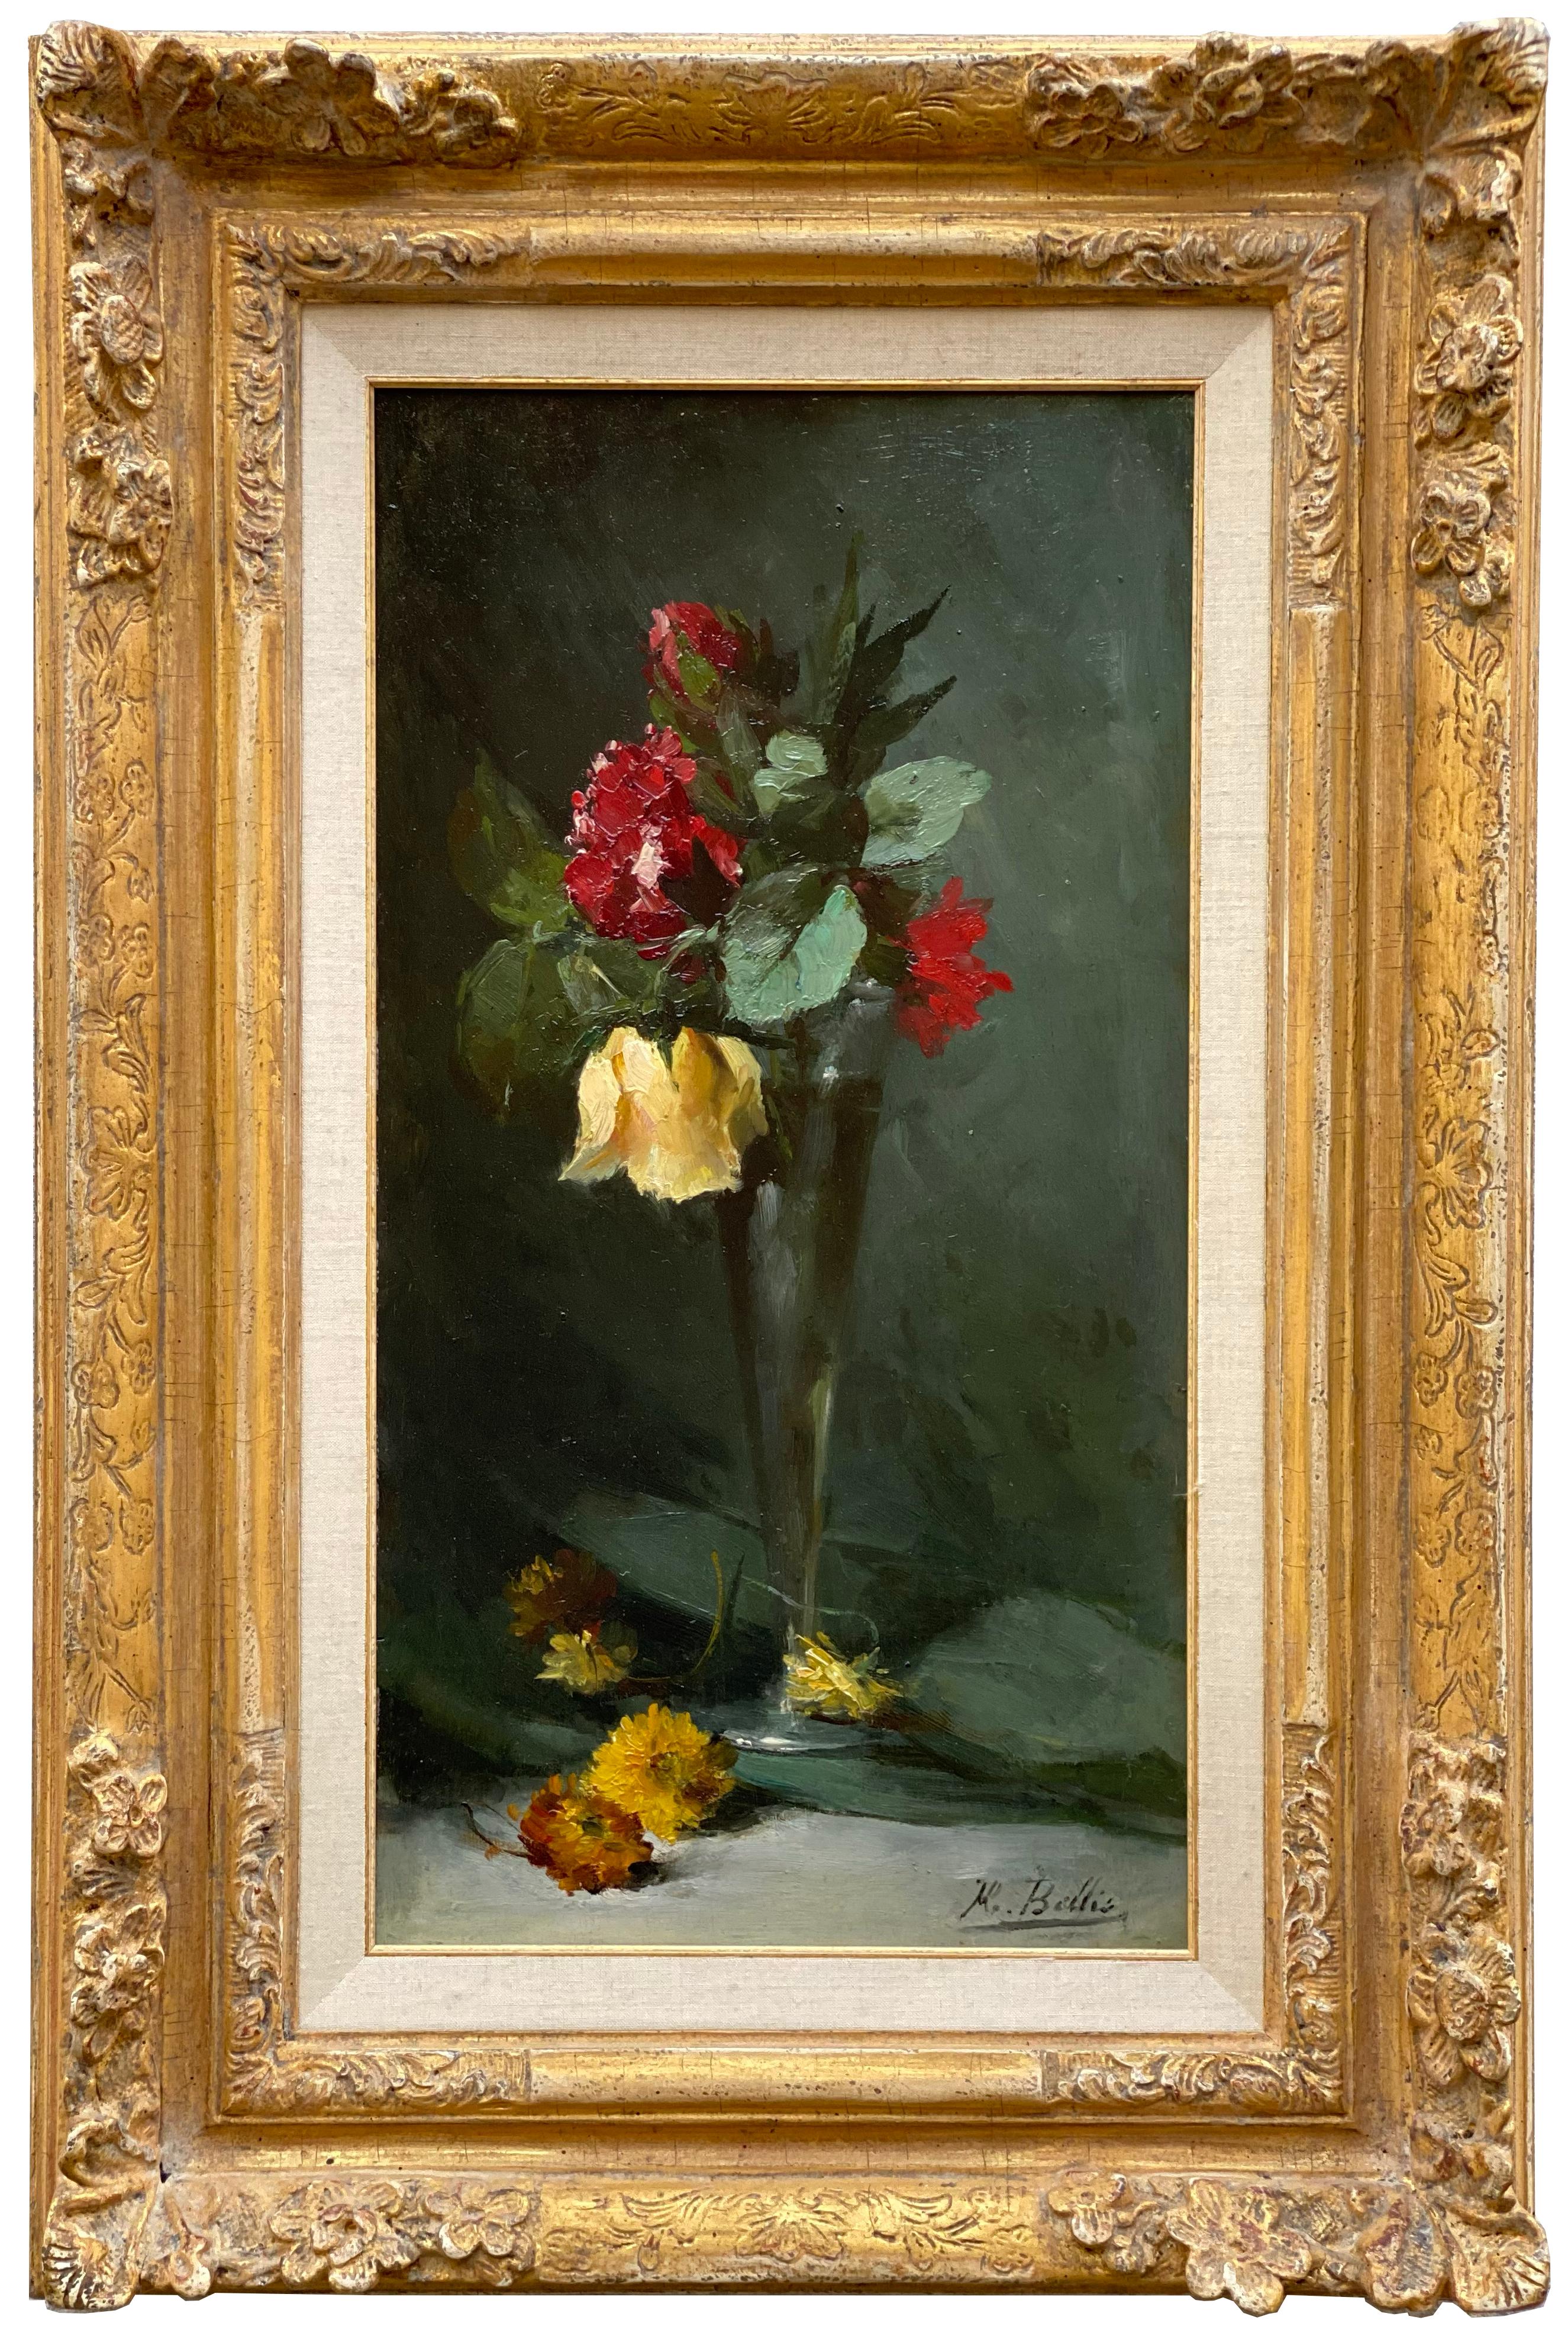   Hubert Bellis, Brüssel 1831 - 1902, belgischer Maler, "Rote und gelbe Rosen".